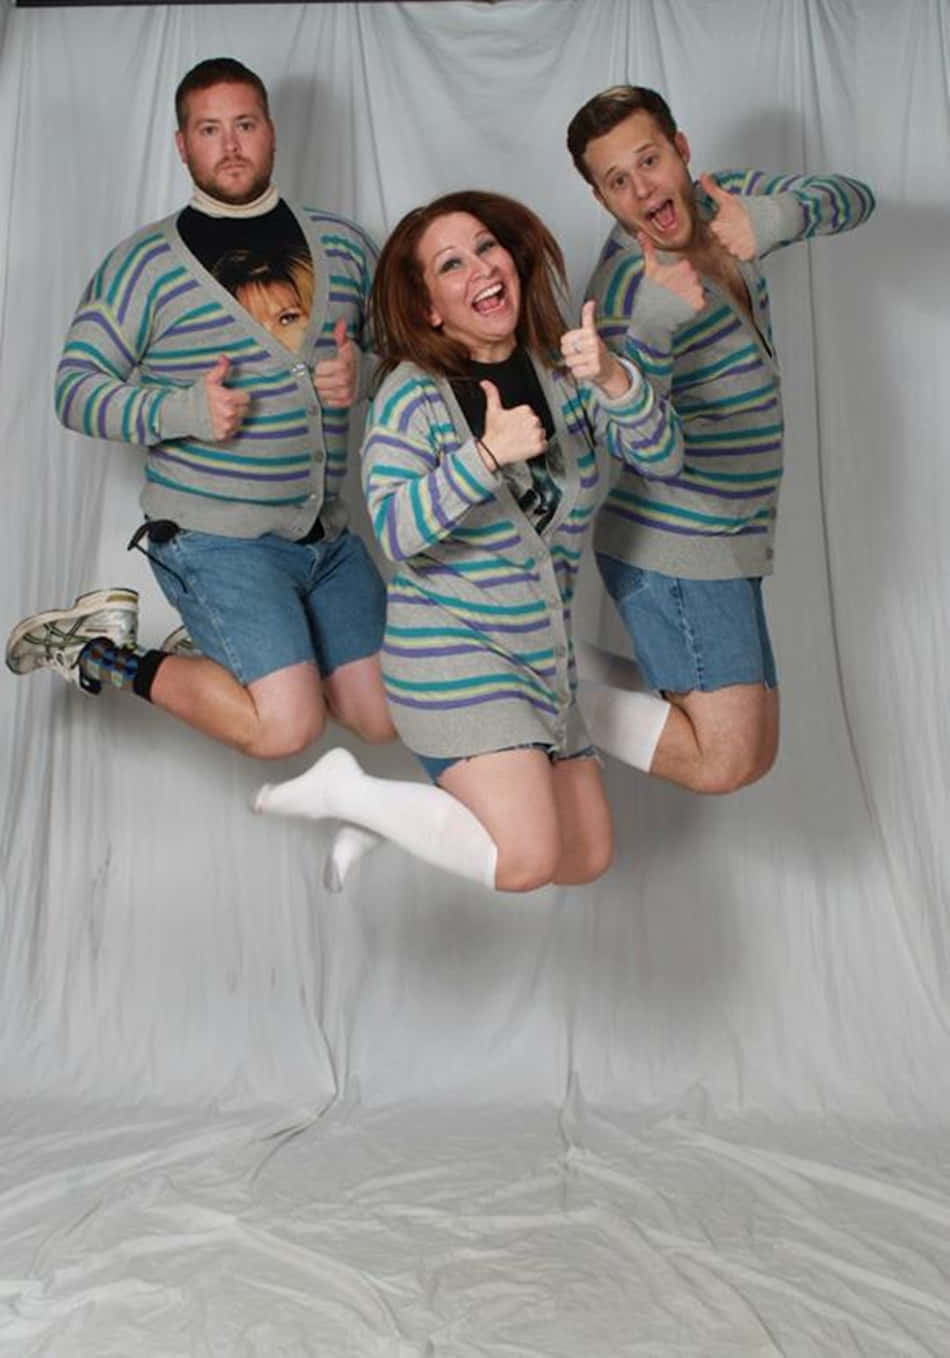 Three Friends Jumped Shot Awkward Picture